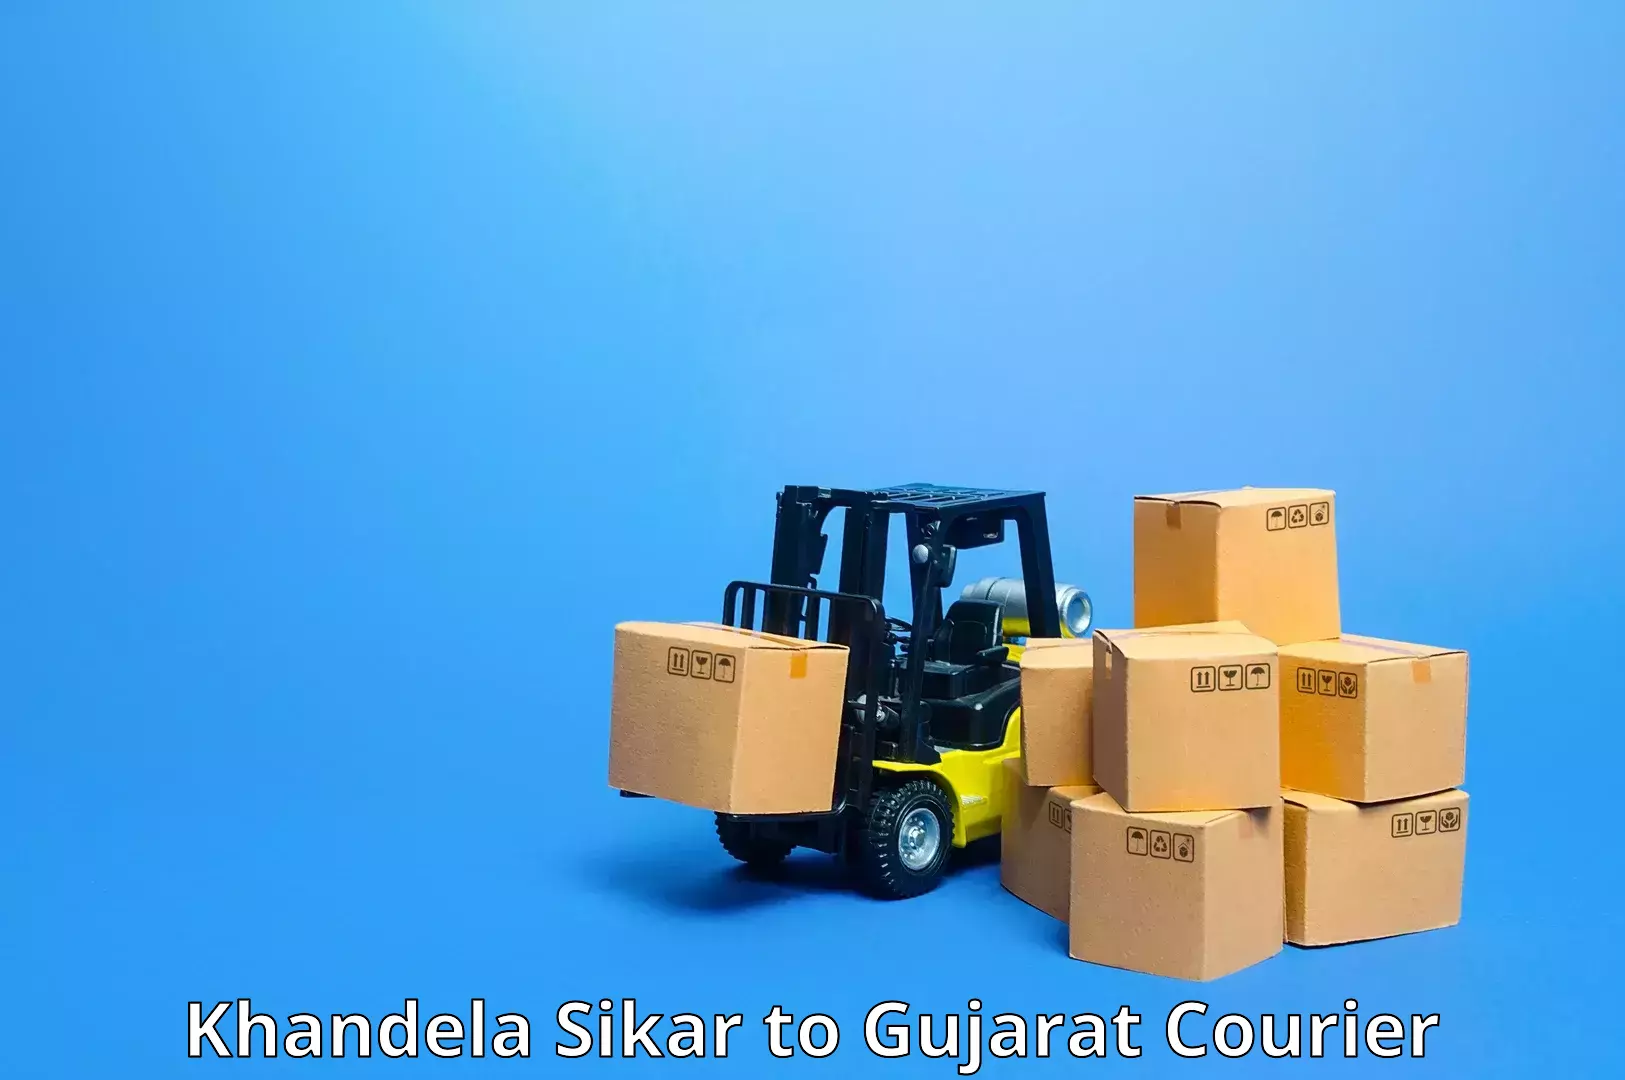 Global freight services Khandela Sikar to Veraval